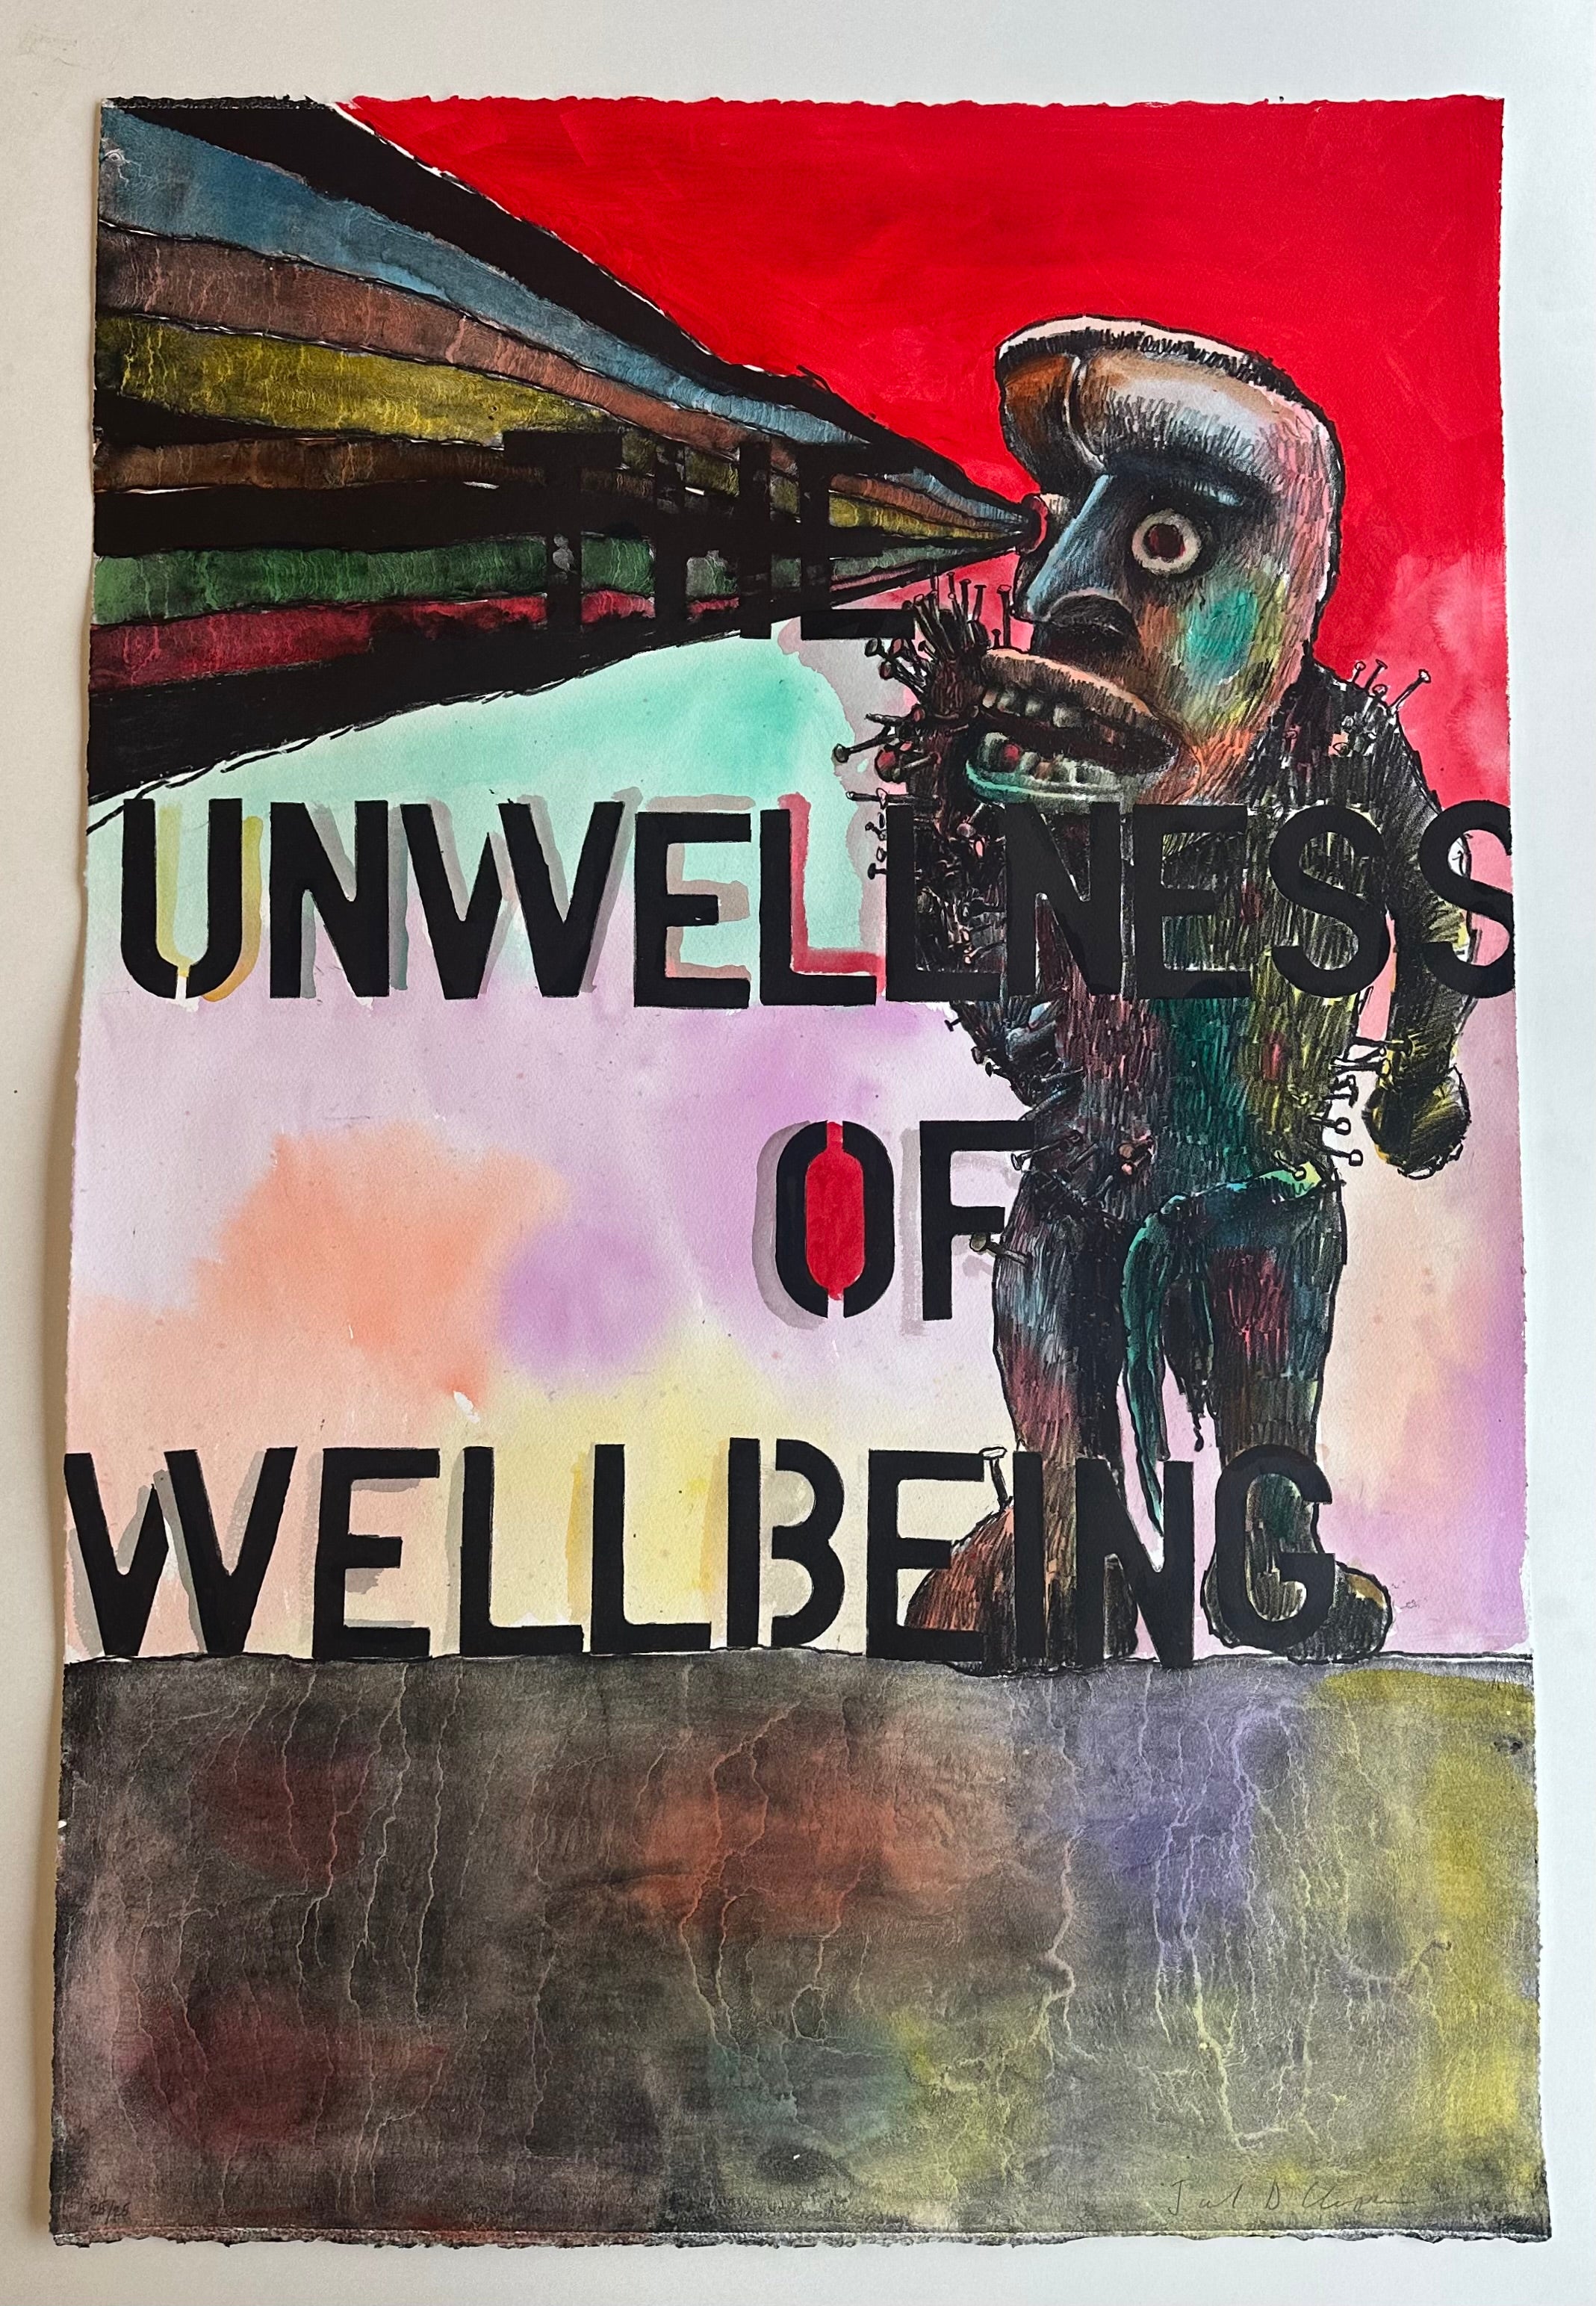 'Unwellness Of Wellbeing'